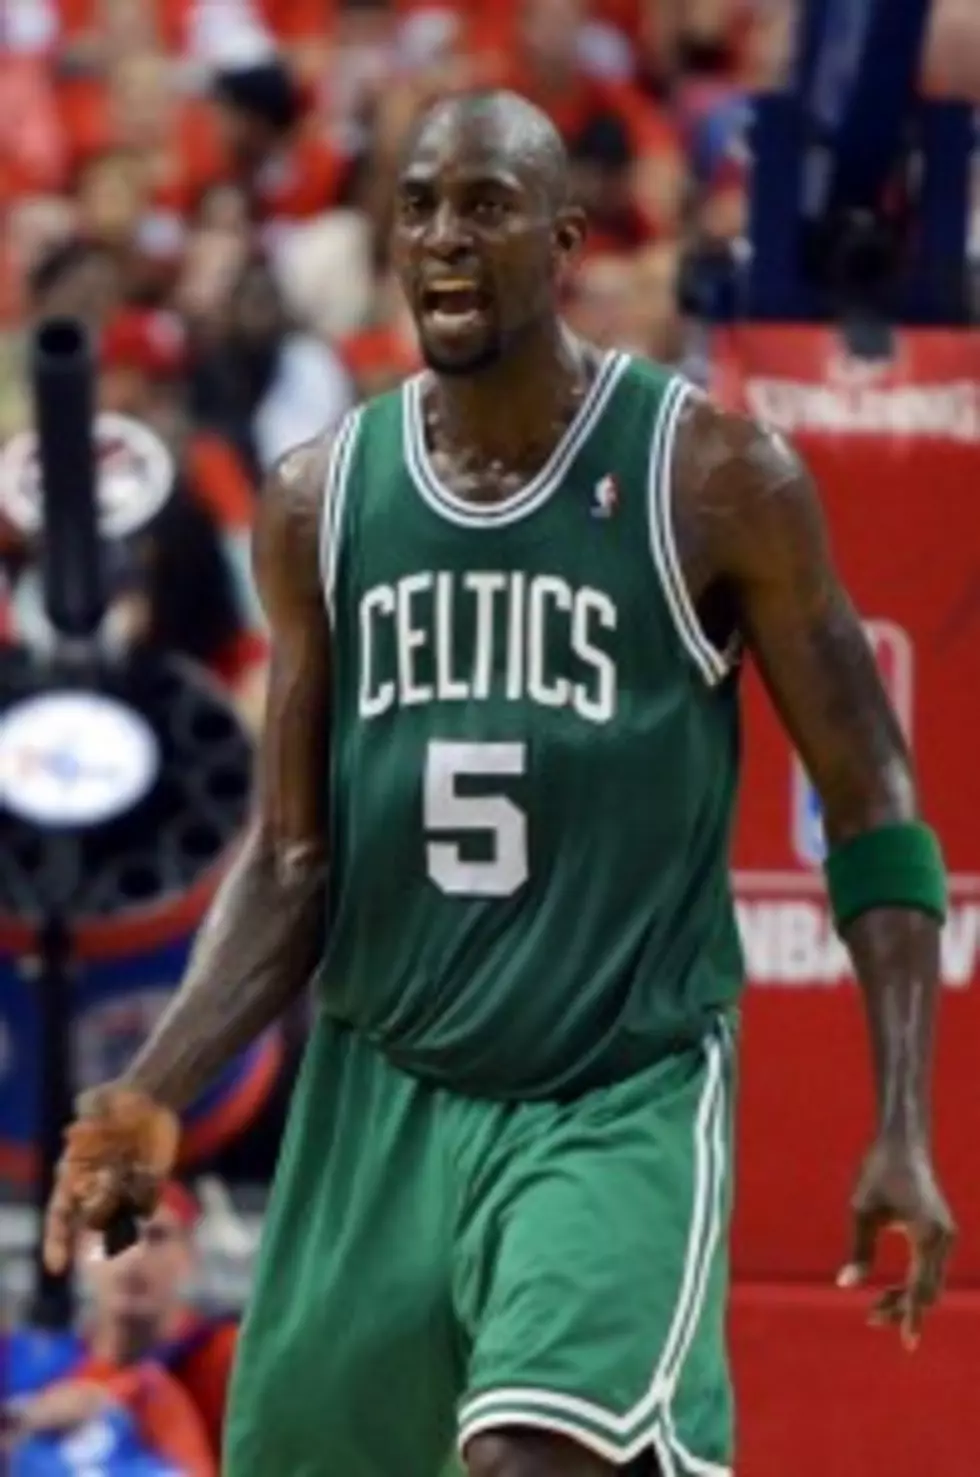 Celtics Demolish 76ers In Game 3